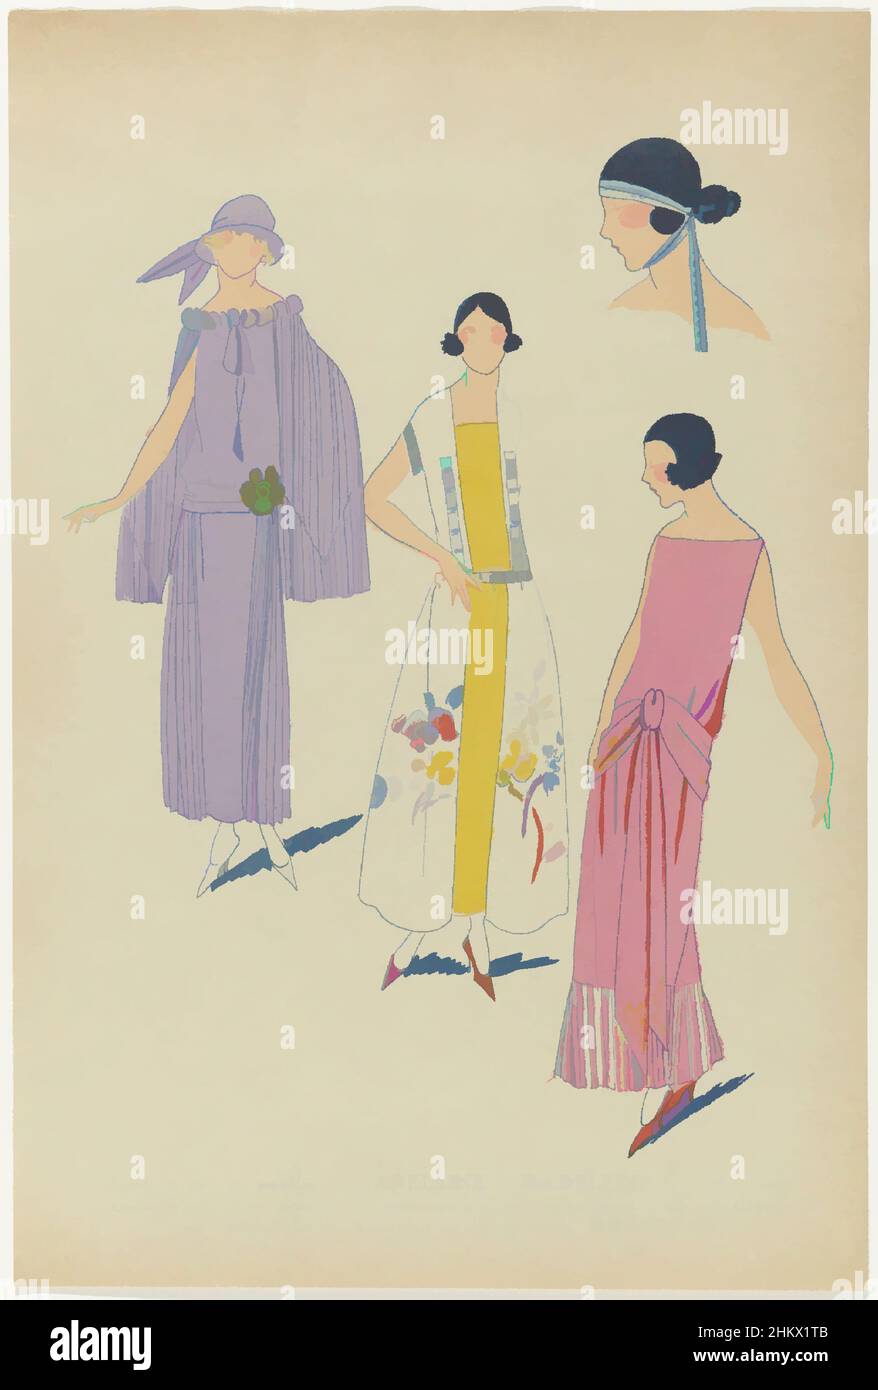 Eye On Design: 1920s Evening Dress